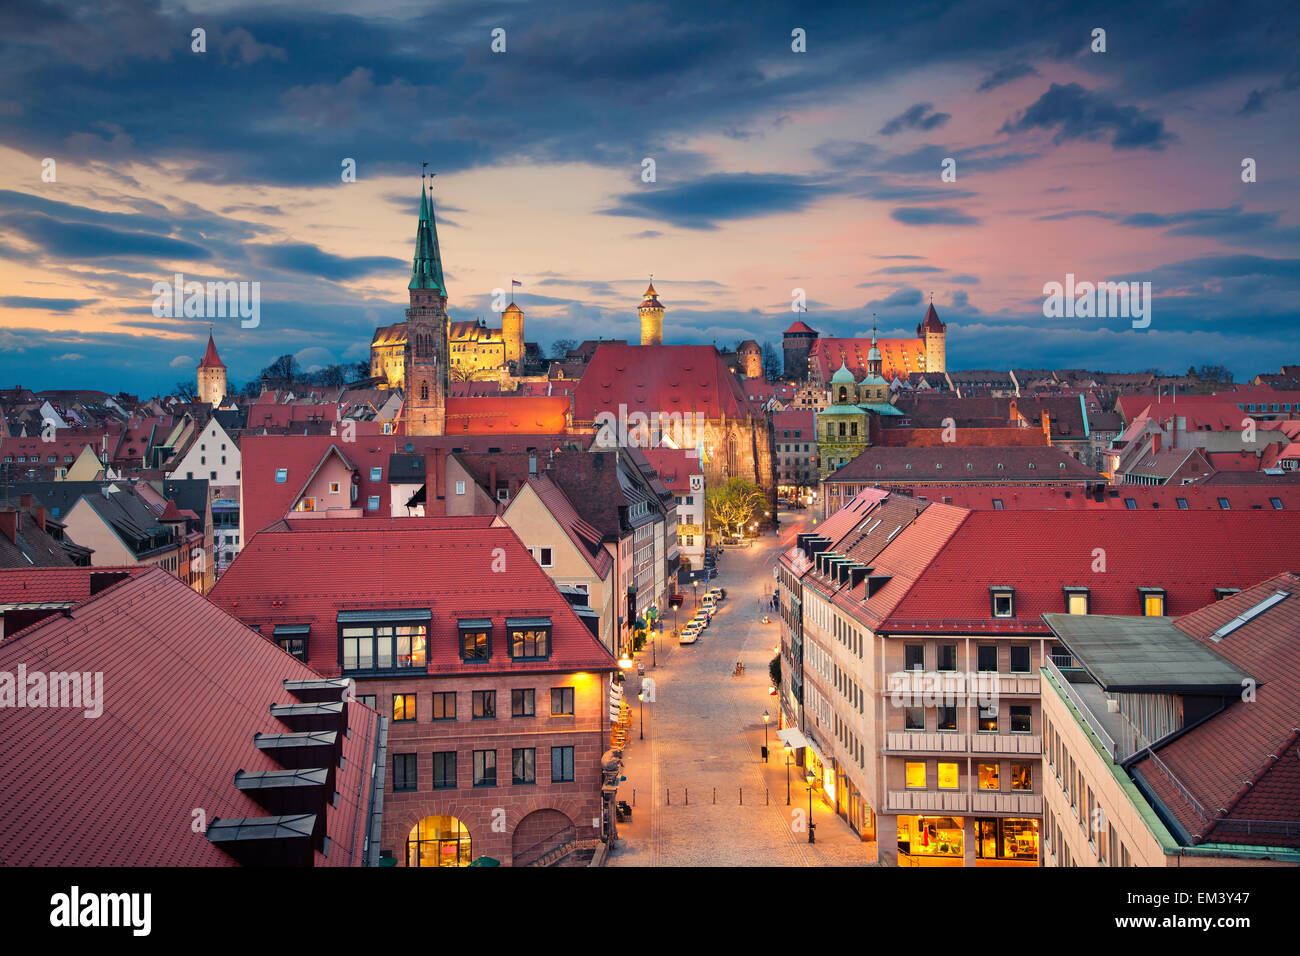 Nuremberg. Image of historic downtown of Nuremberg, Germany at sunset. Stock Photo